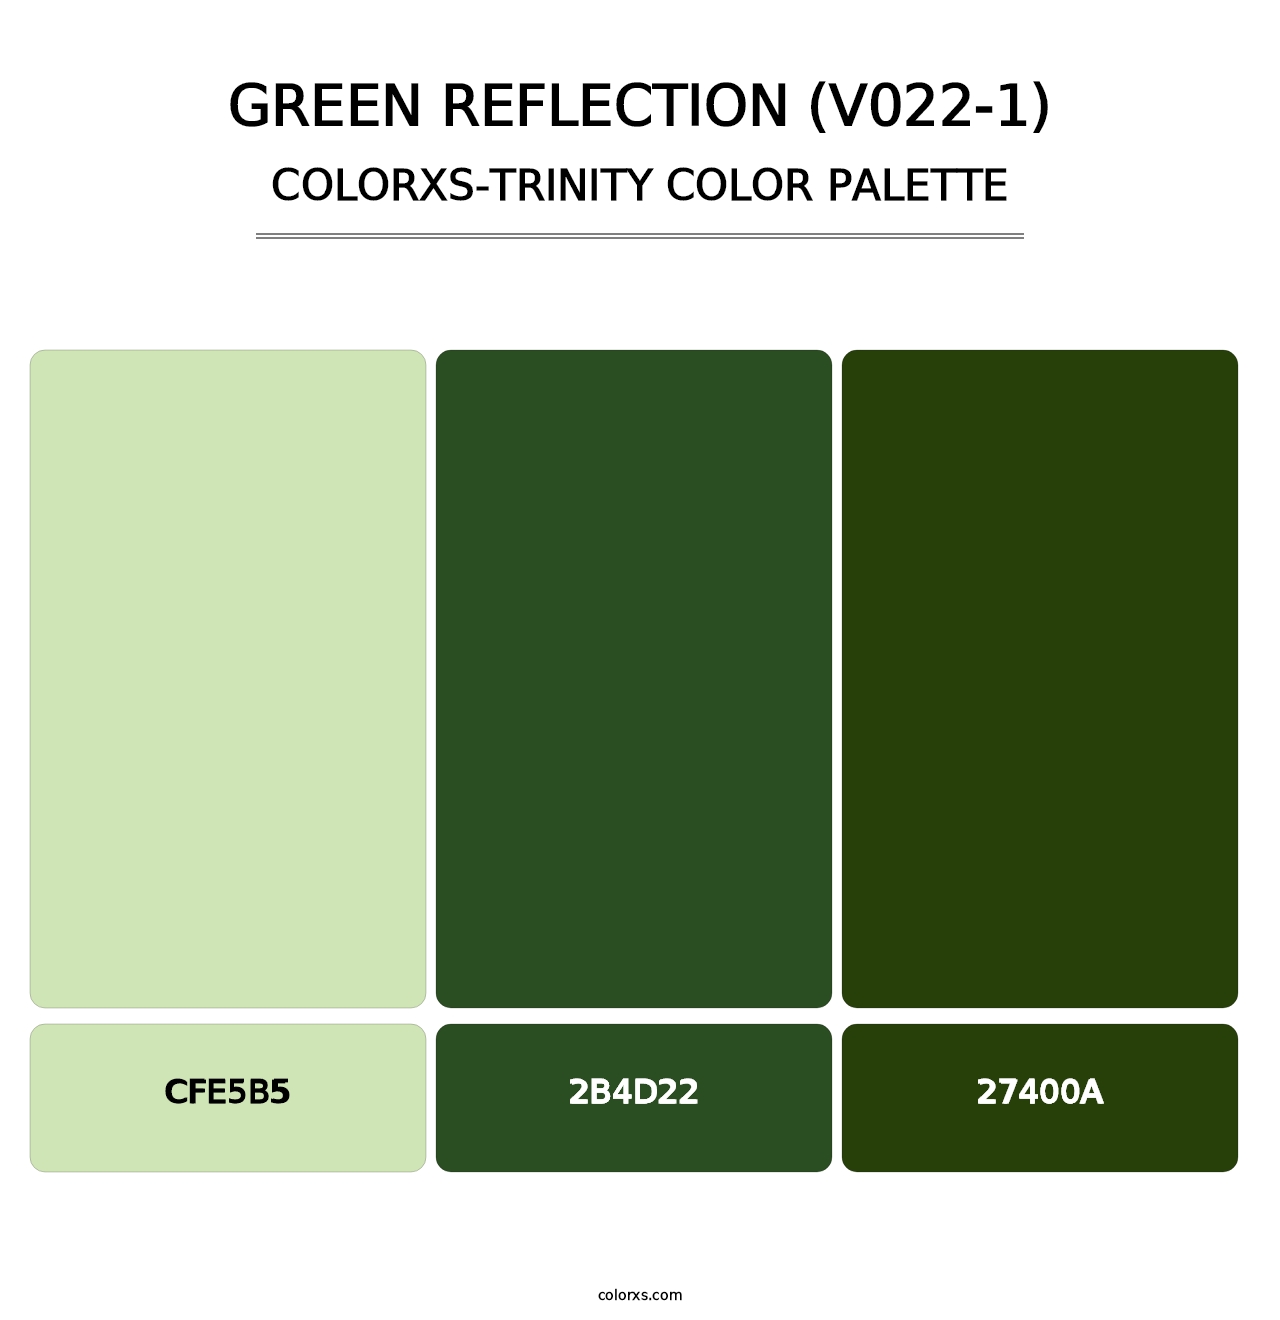 Green Reflection (V022-1) - Colorxs Trinity Palette